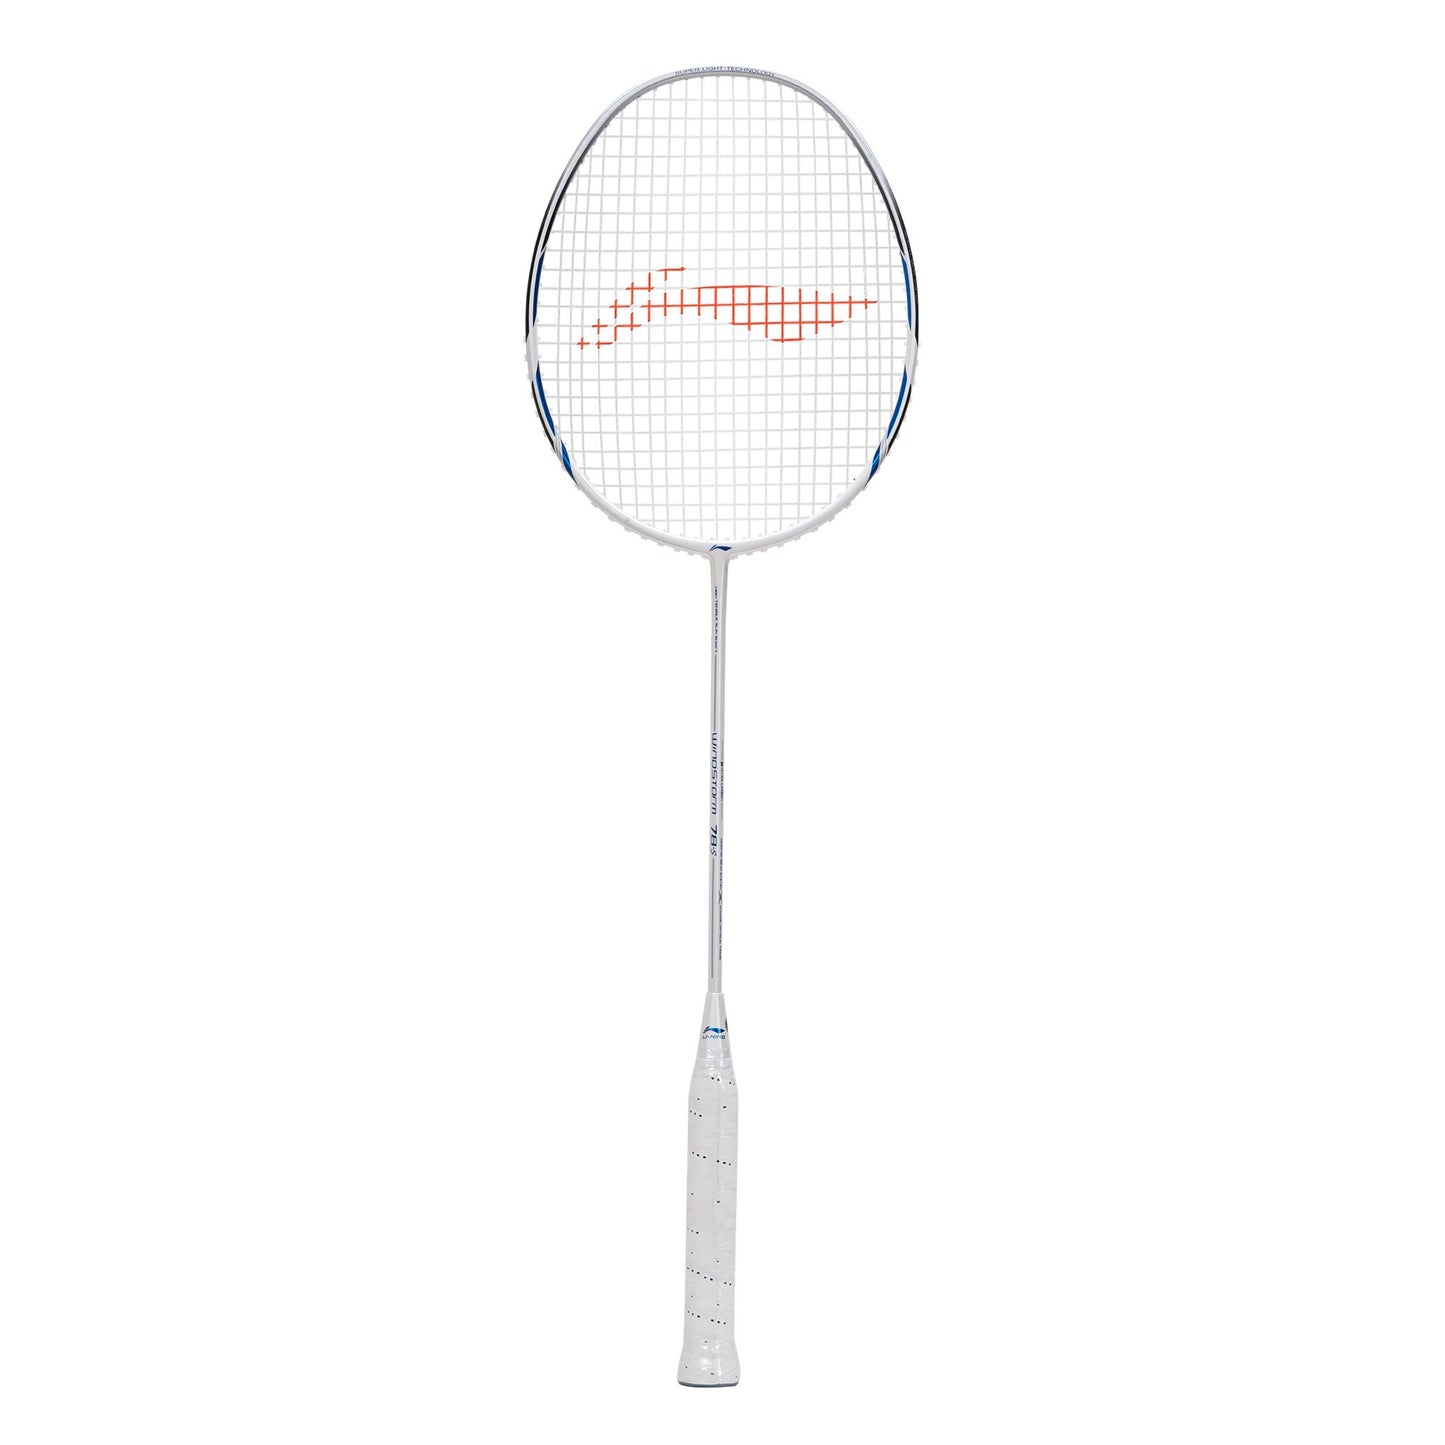 Li-Ning Windstorm 78 S (White/Blue) Badminton Racket